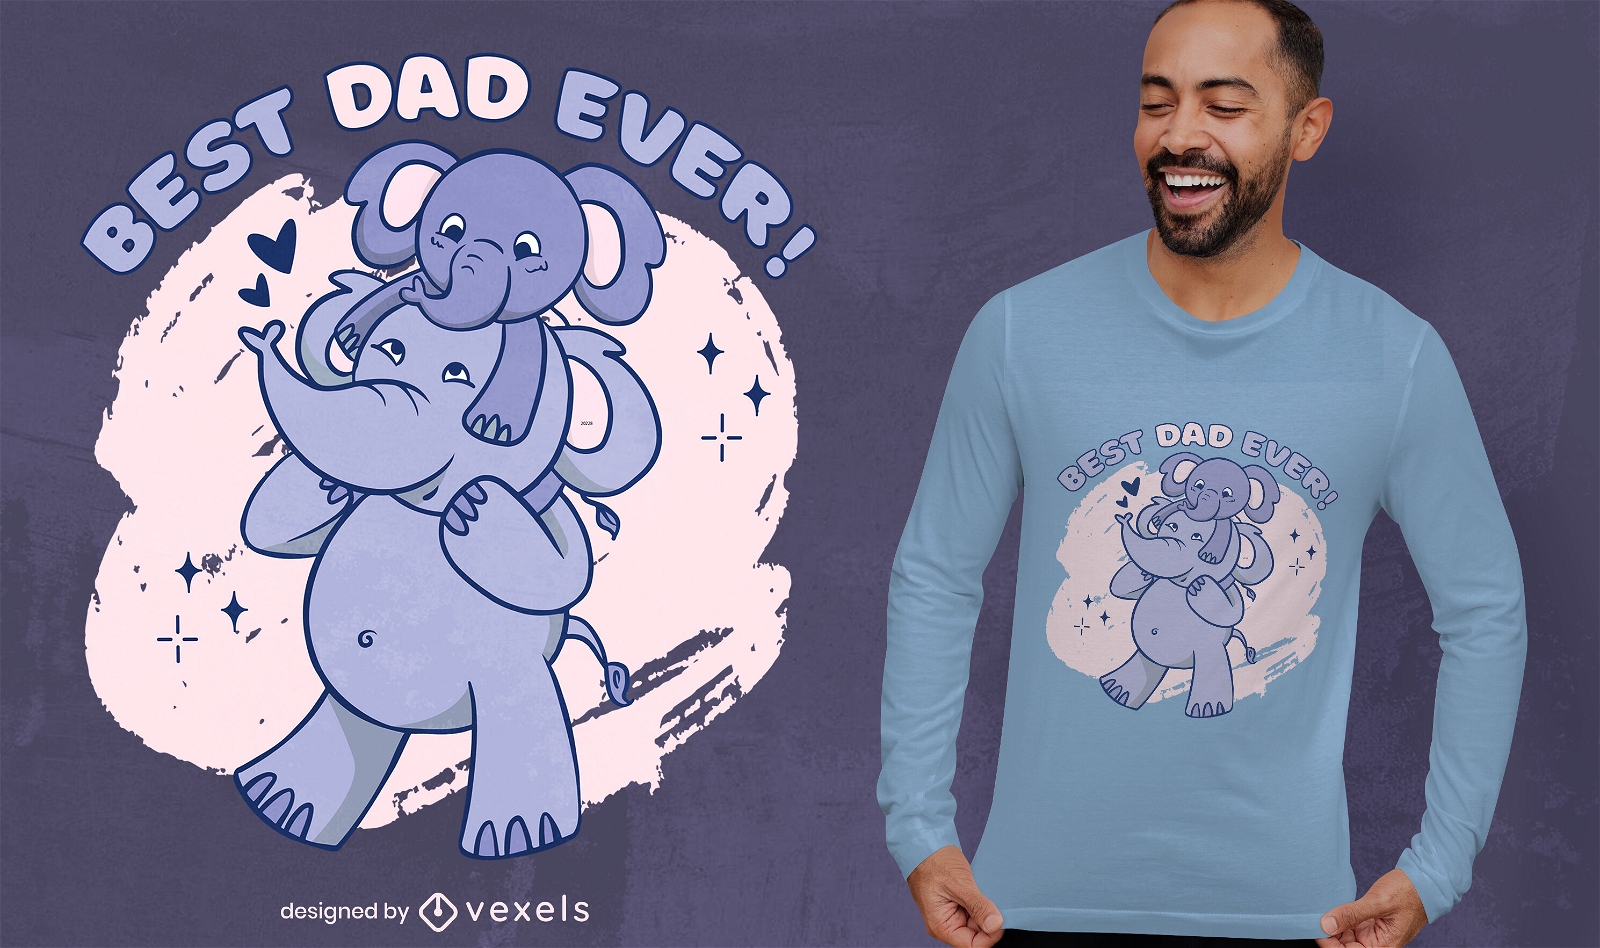 El mejor dise?o de camiseta de elefantes de pap?